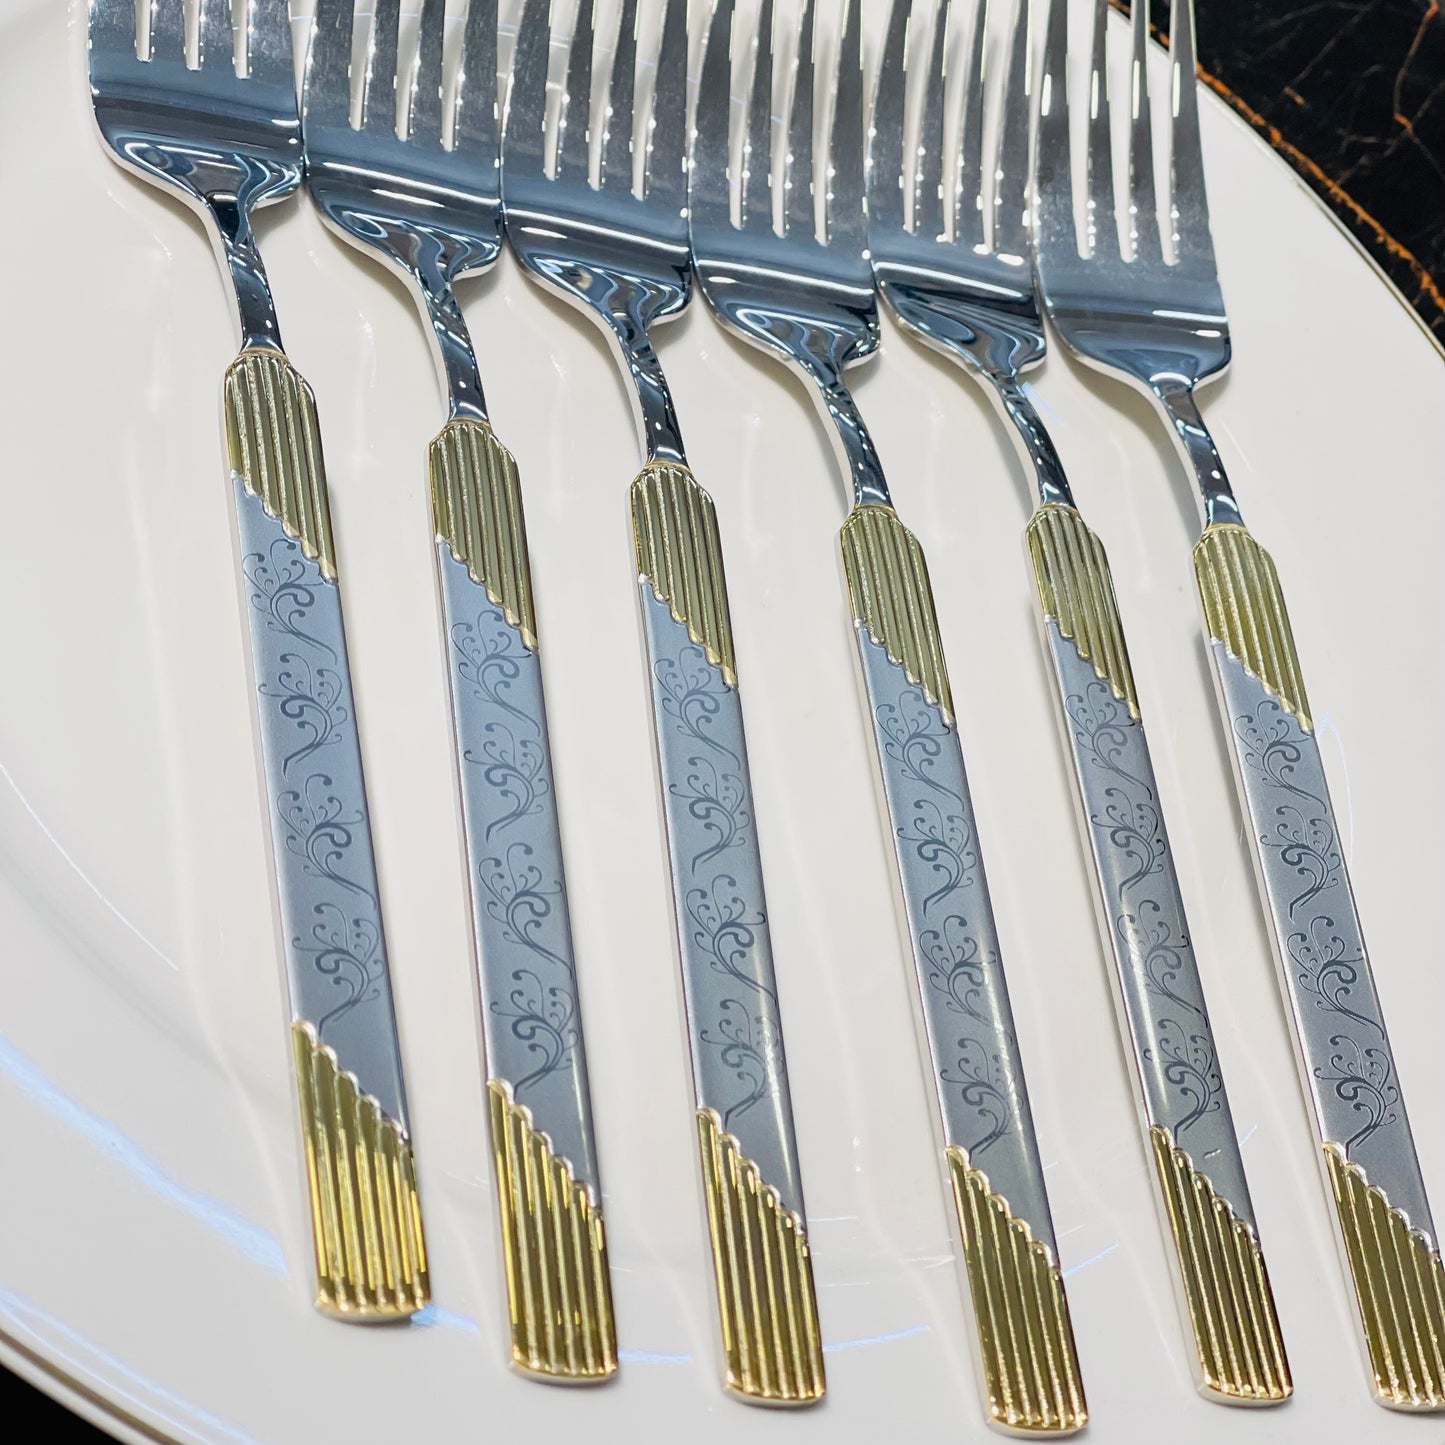 6 Pcs Cutlery Fork Set